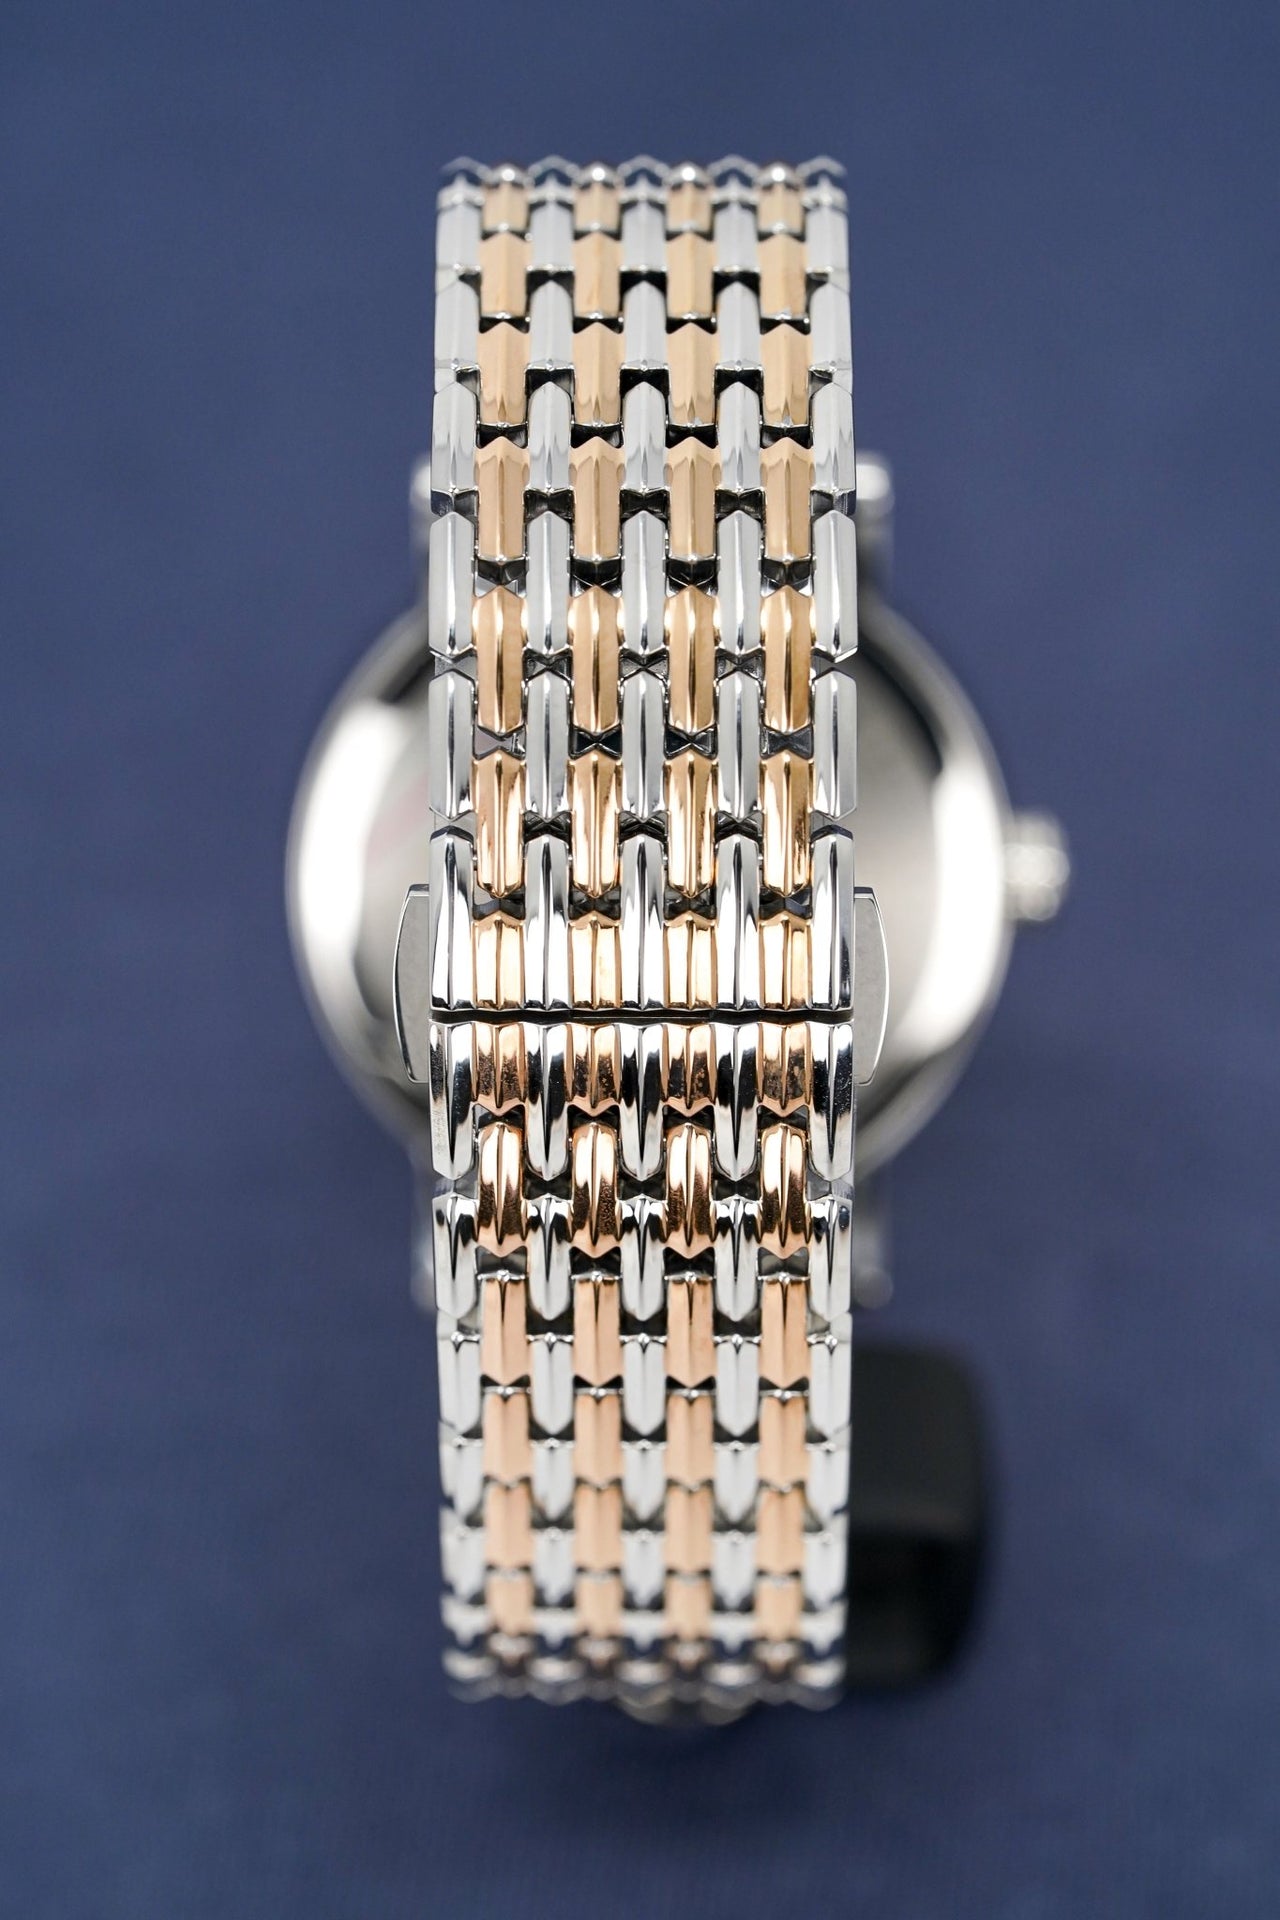 Versace Virtus Quartz White Dial Two Tone Steel Strap Watch for Women - VEHC00519